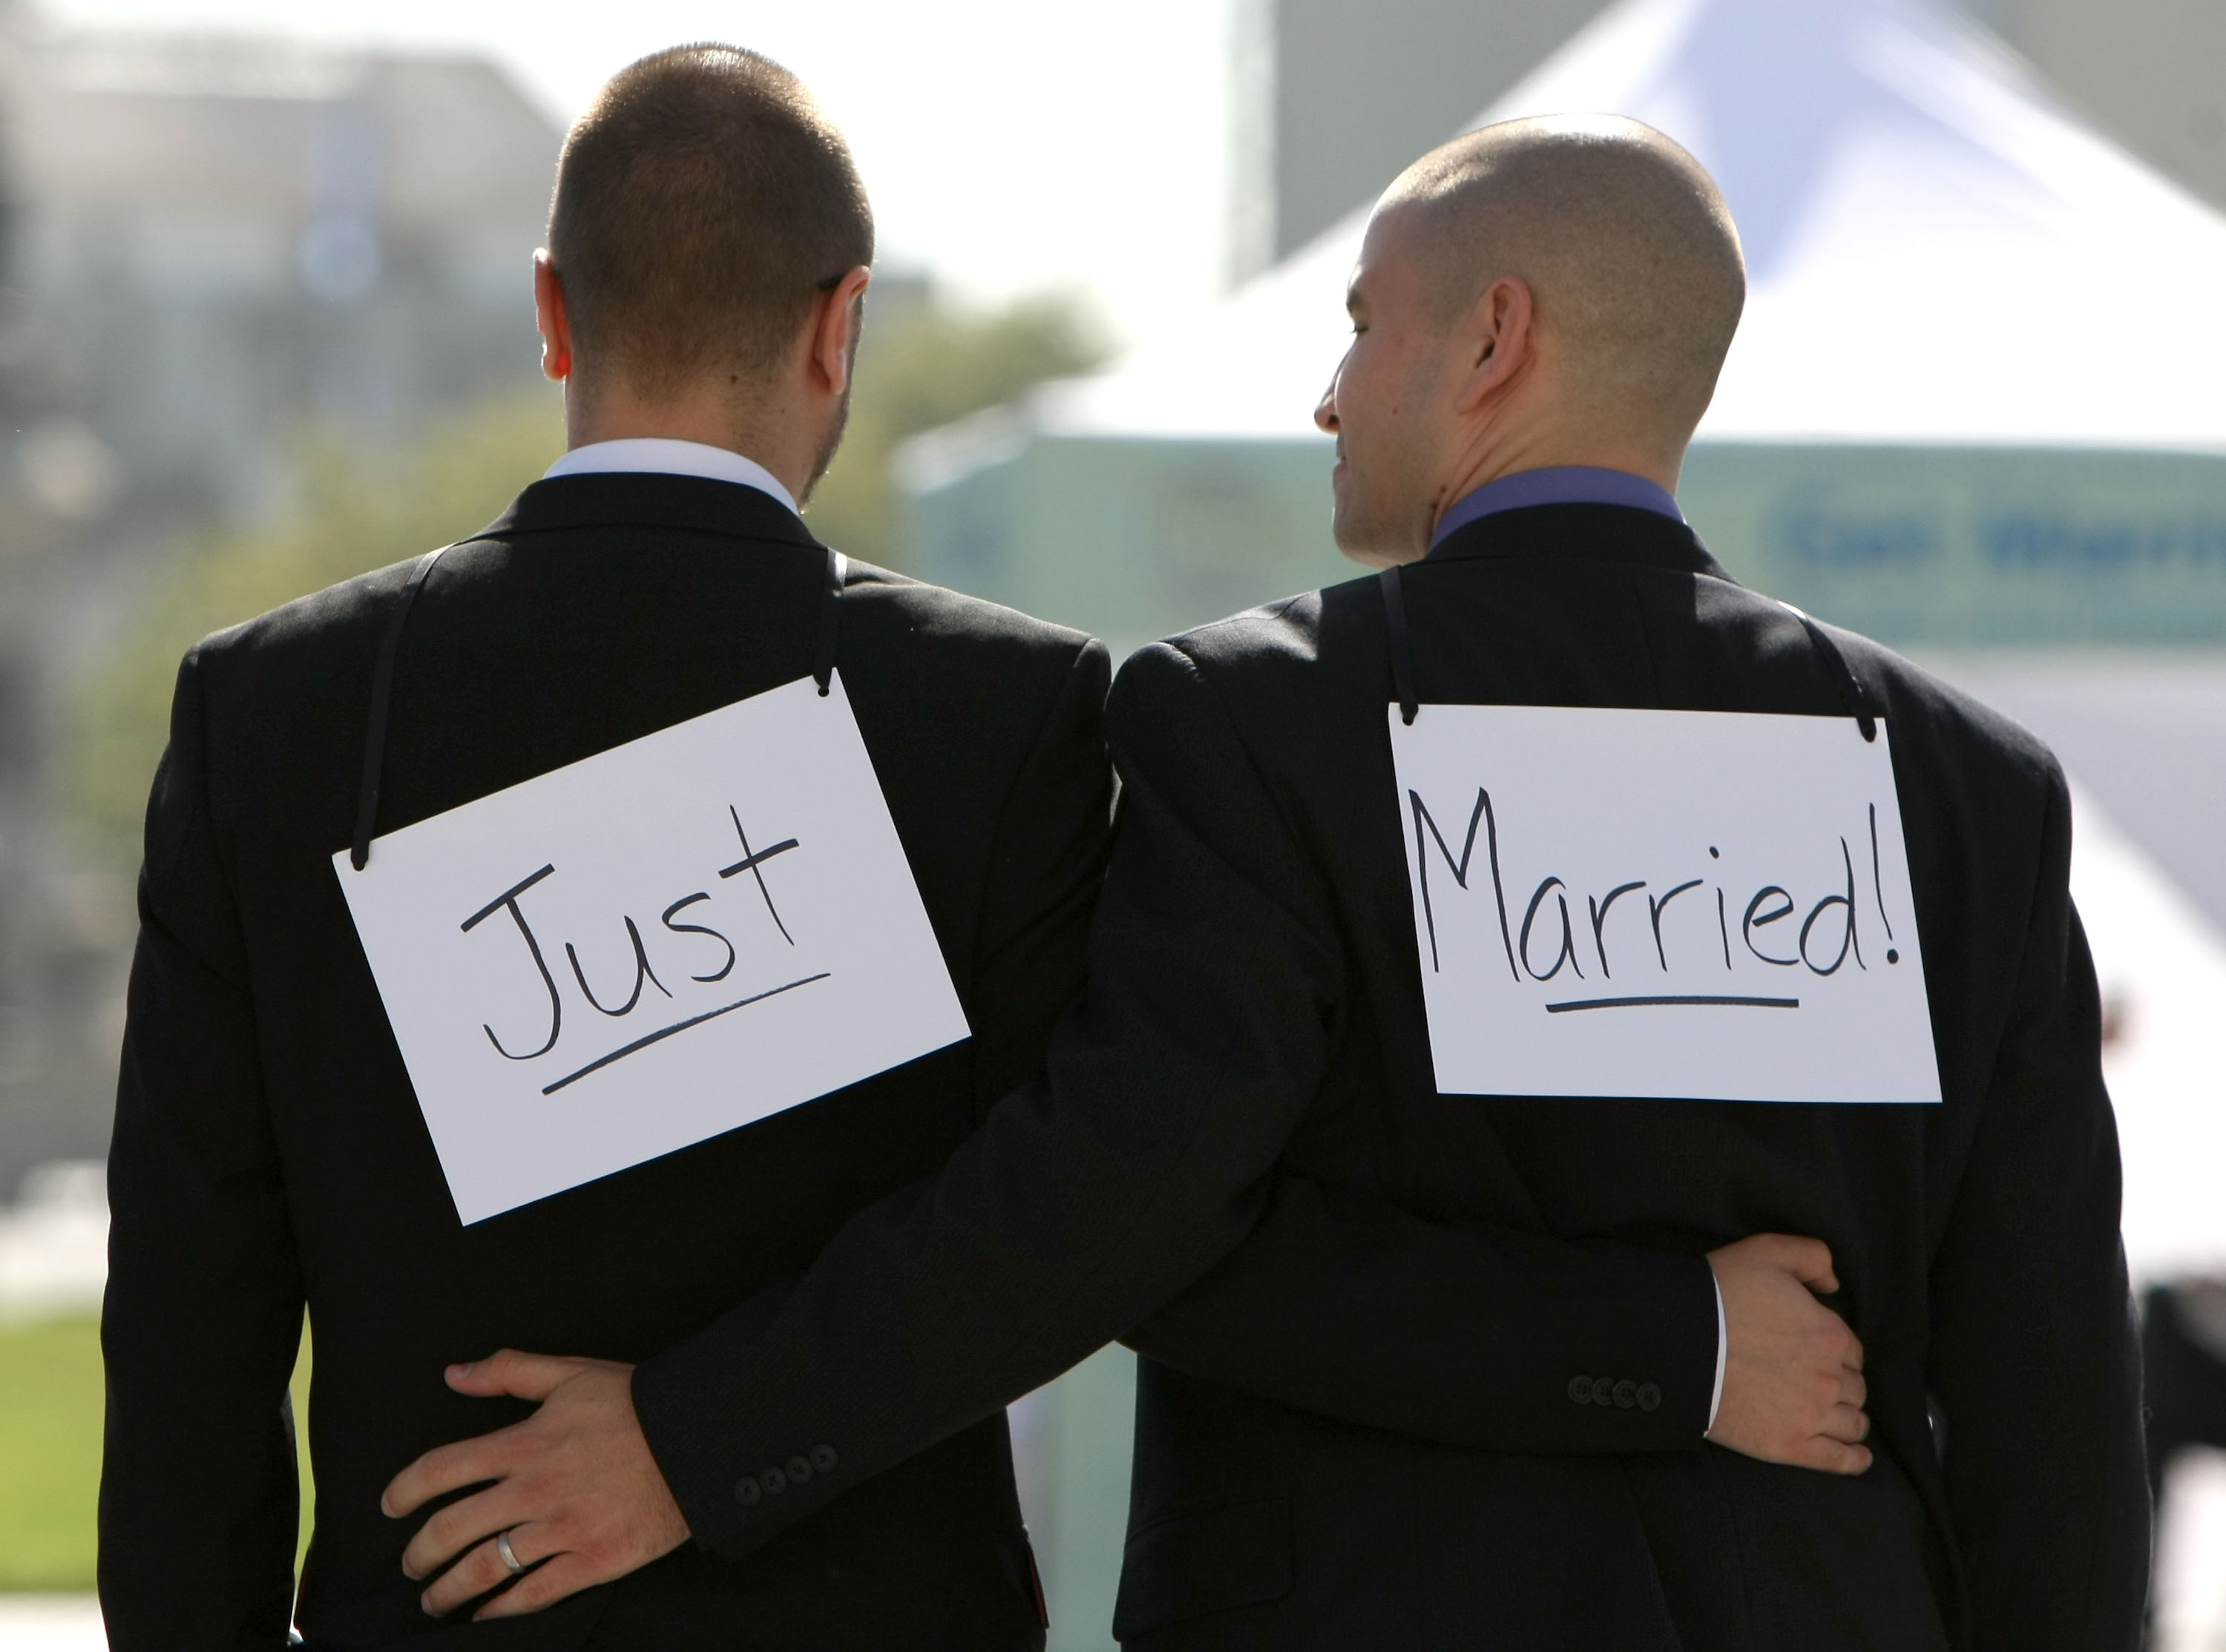 Nashville judge wont halt same-sex marriage order wbir pic pic